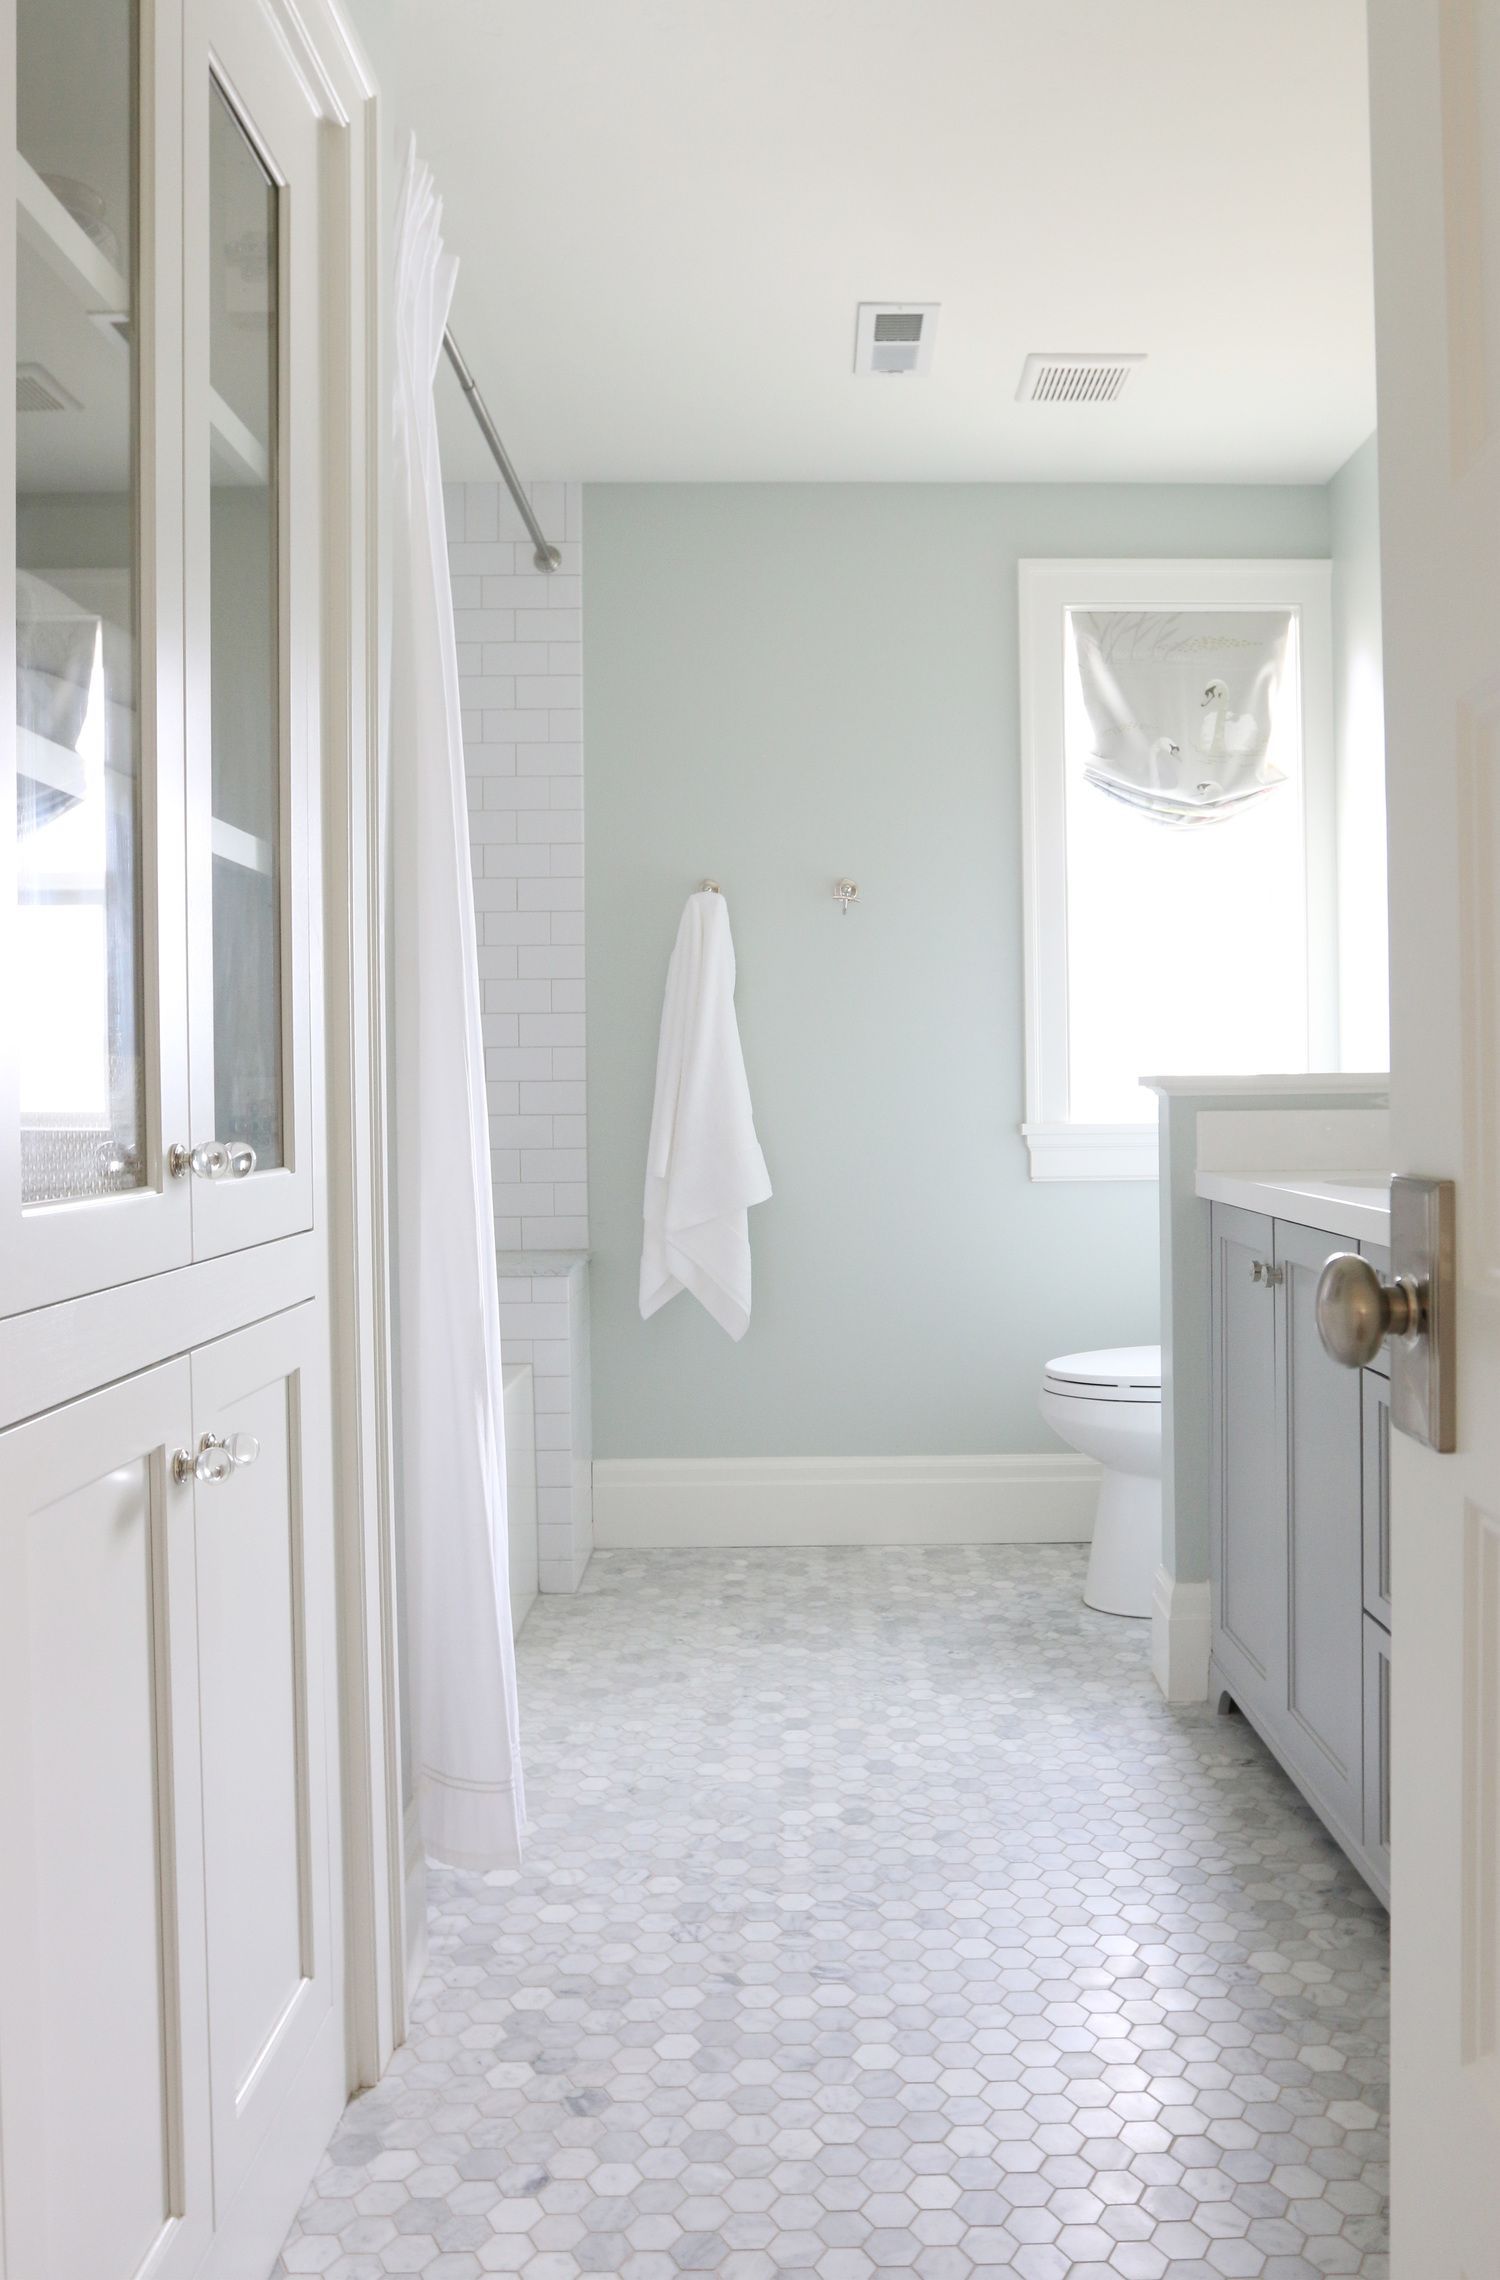 Stunning bathroom revamp project. Wall color is Sherwin Williams “Sea Salt”. Beautiful space. Studio McGee Blog